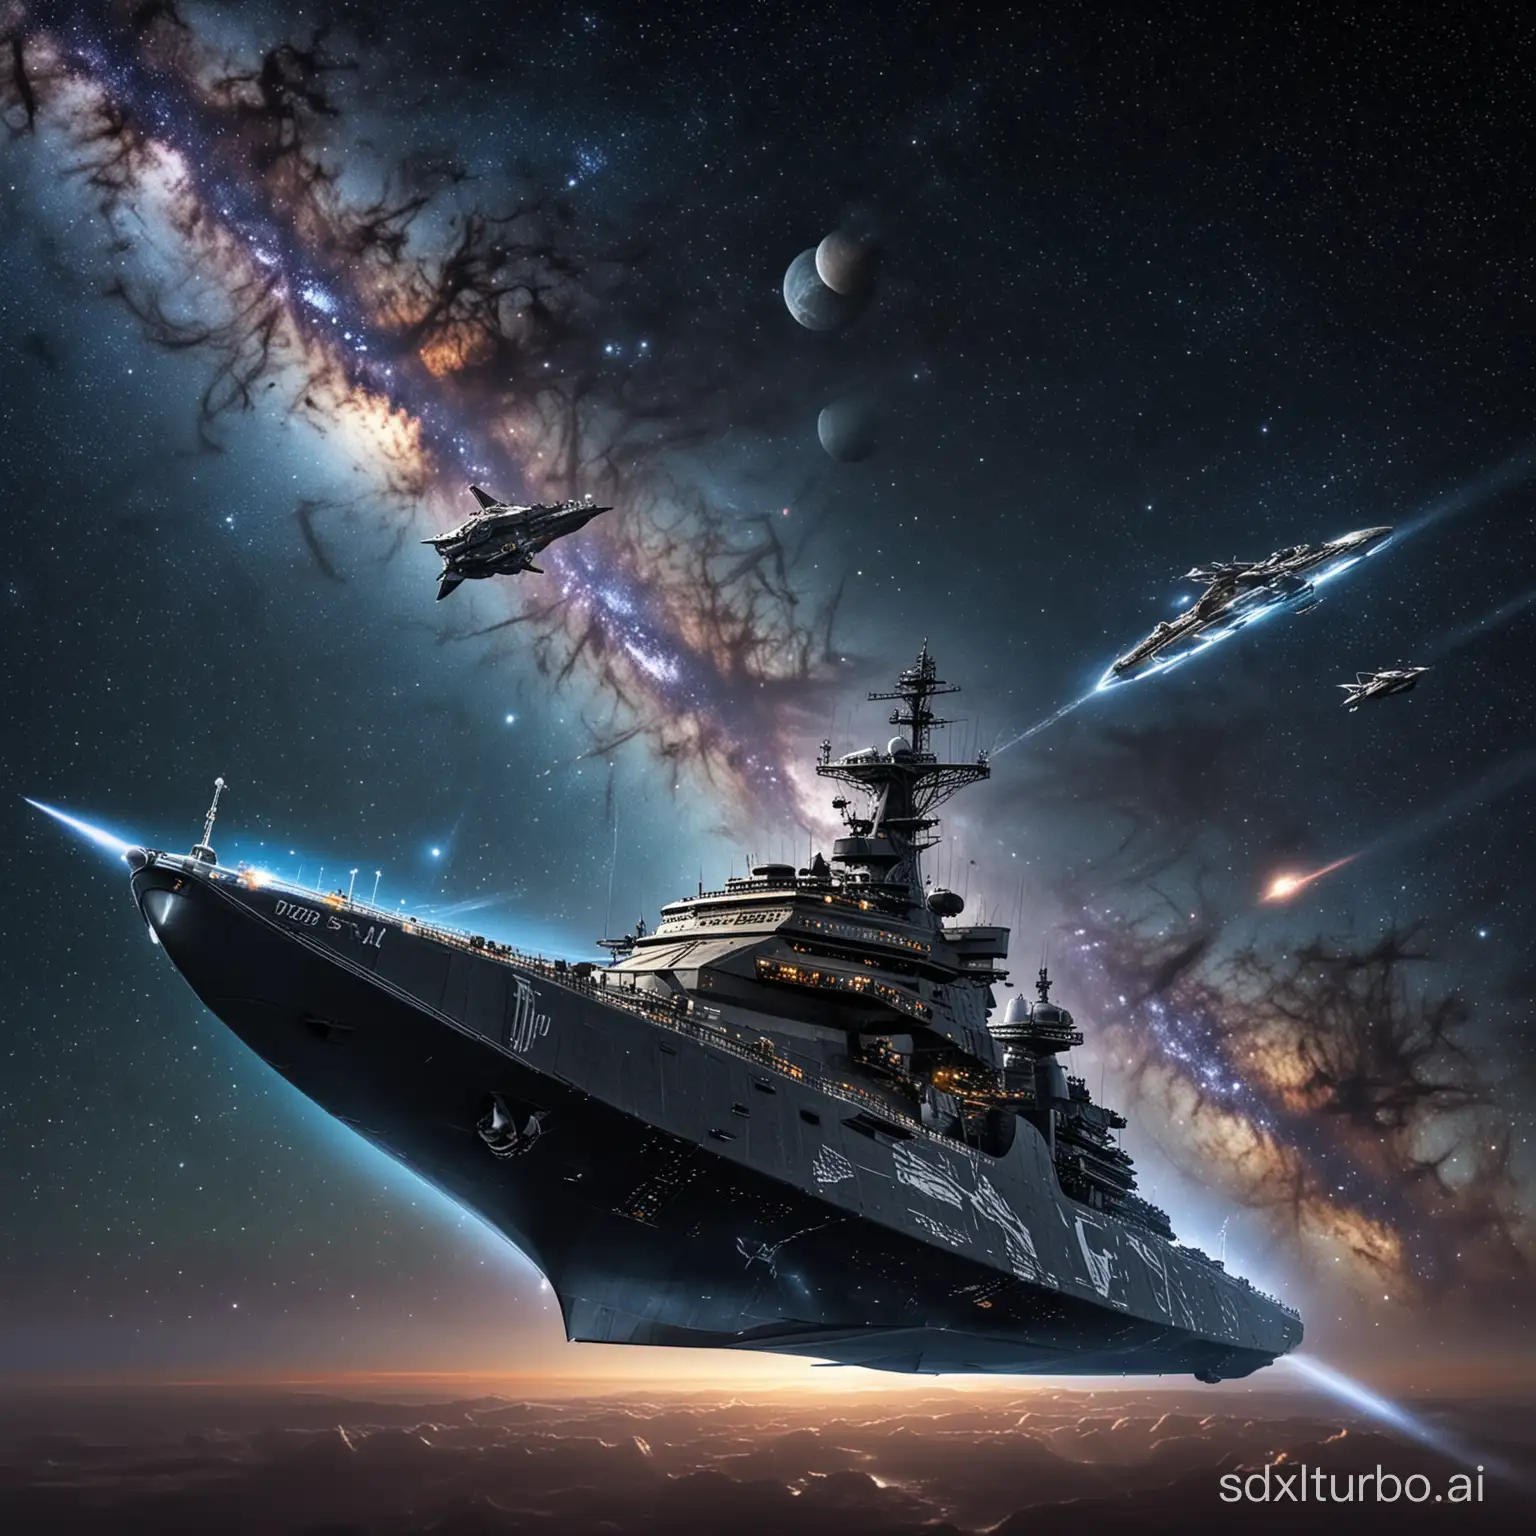 Futuristic-Spacecraft-Fleet-Exploring-the-Milky-Way